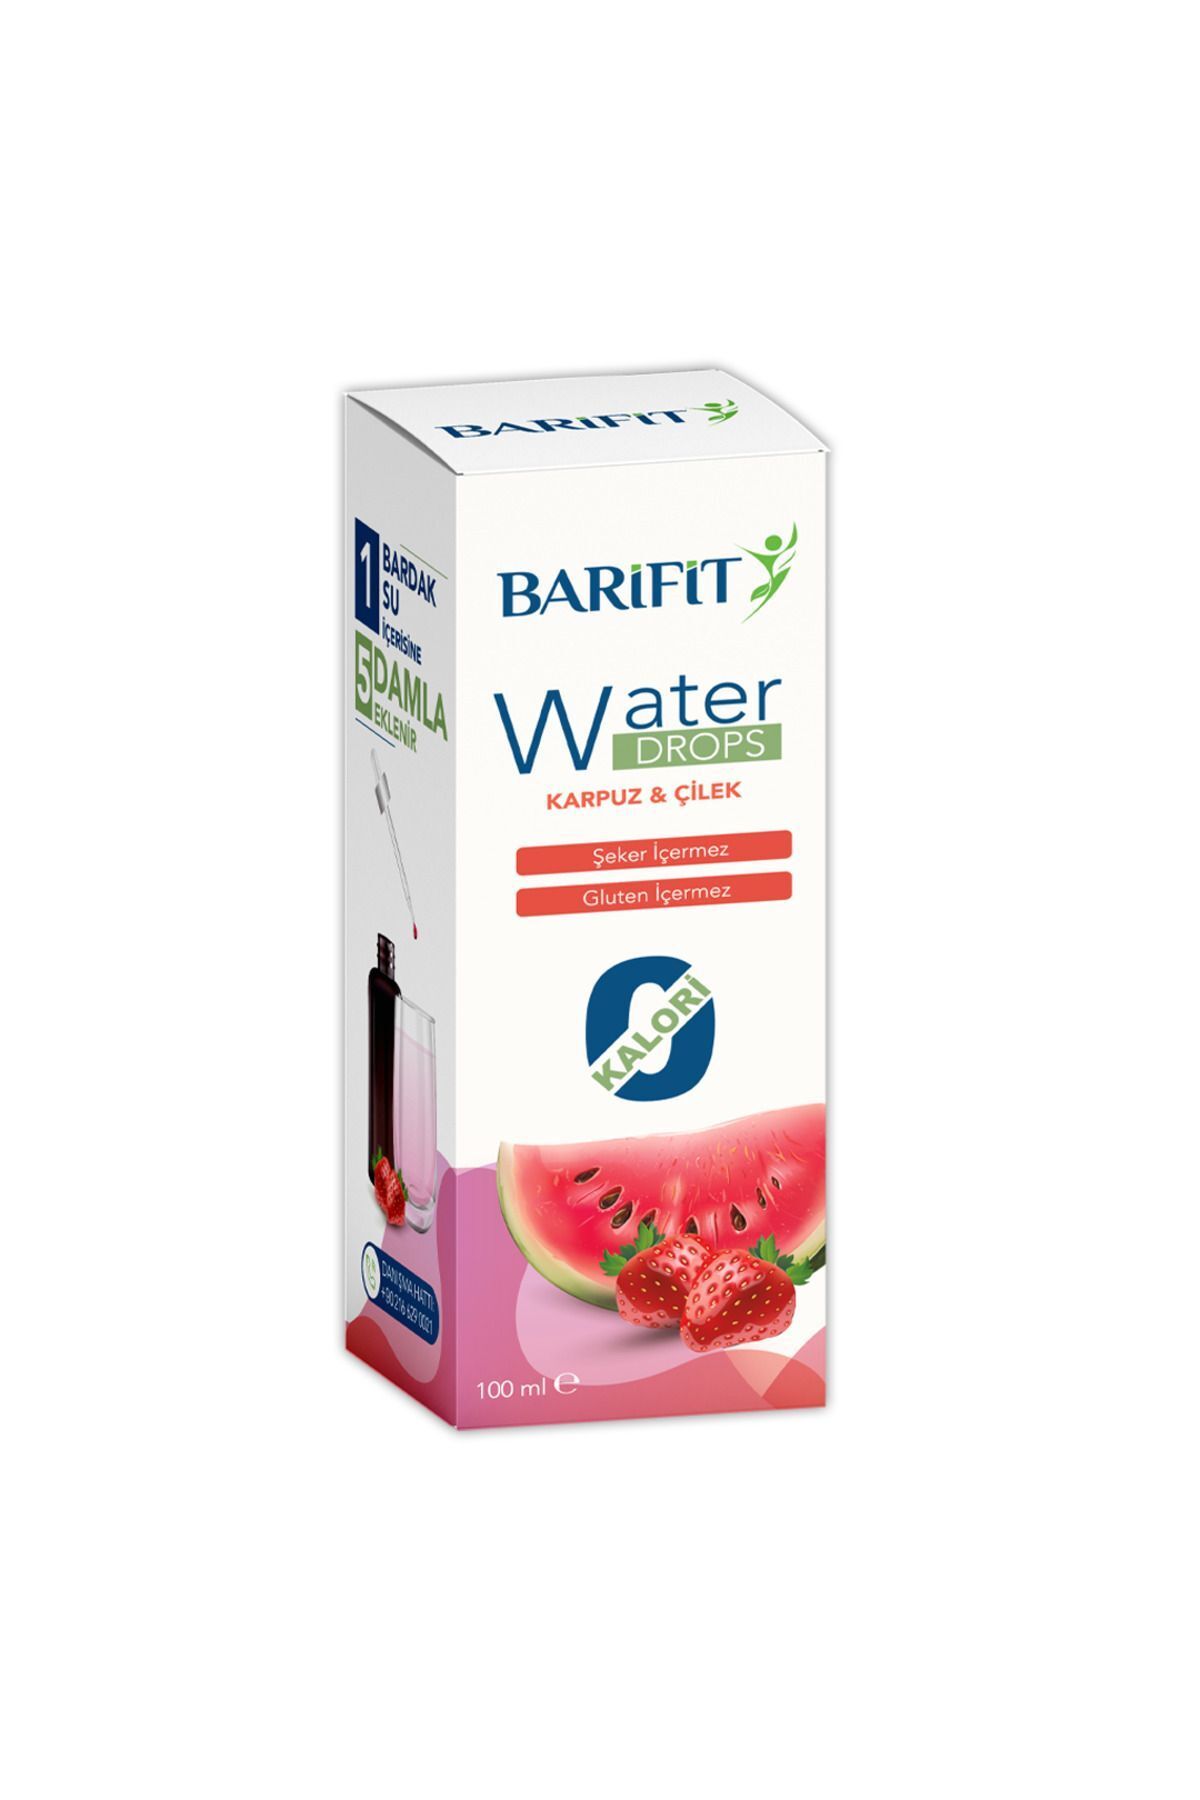 Barifit Waterdrops